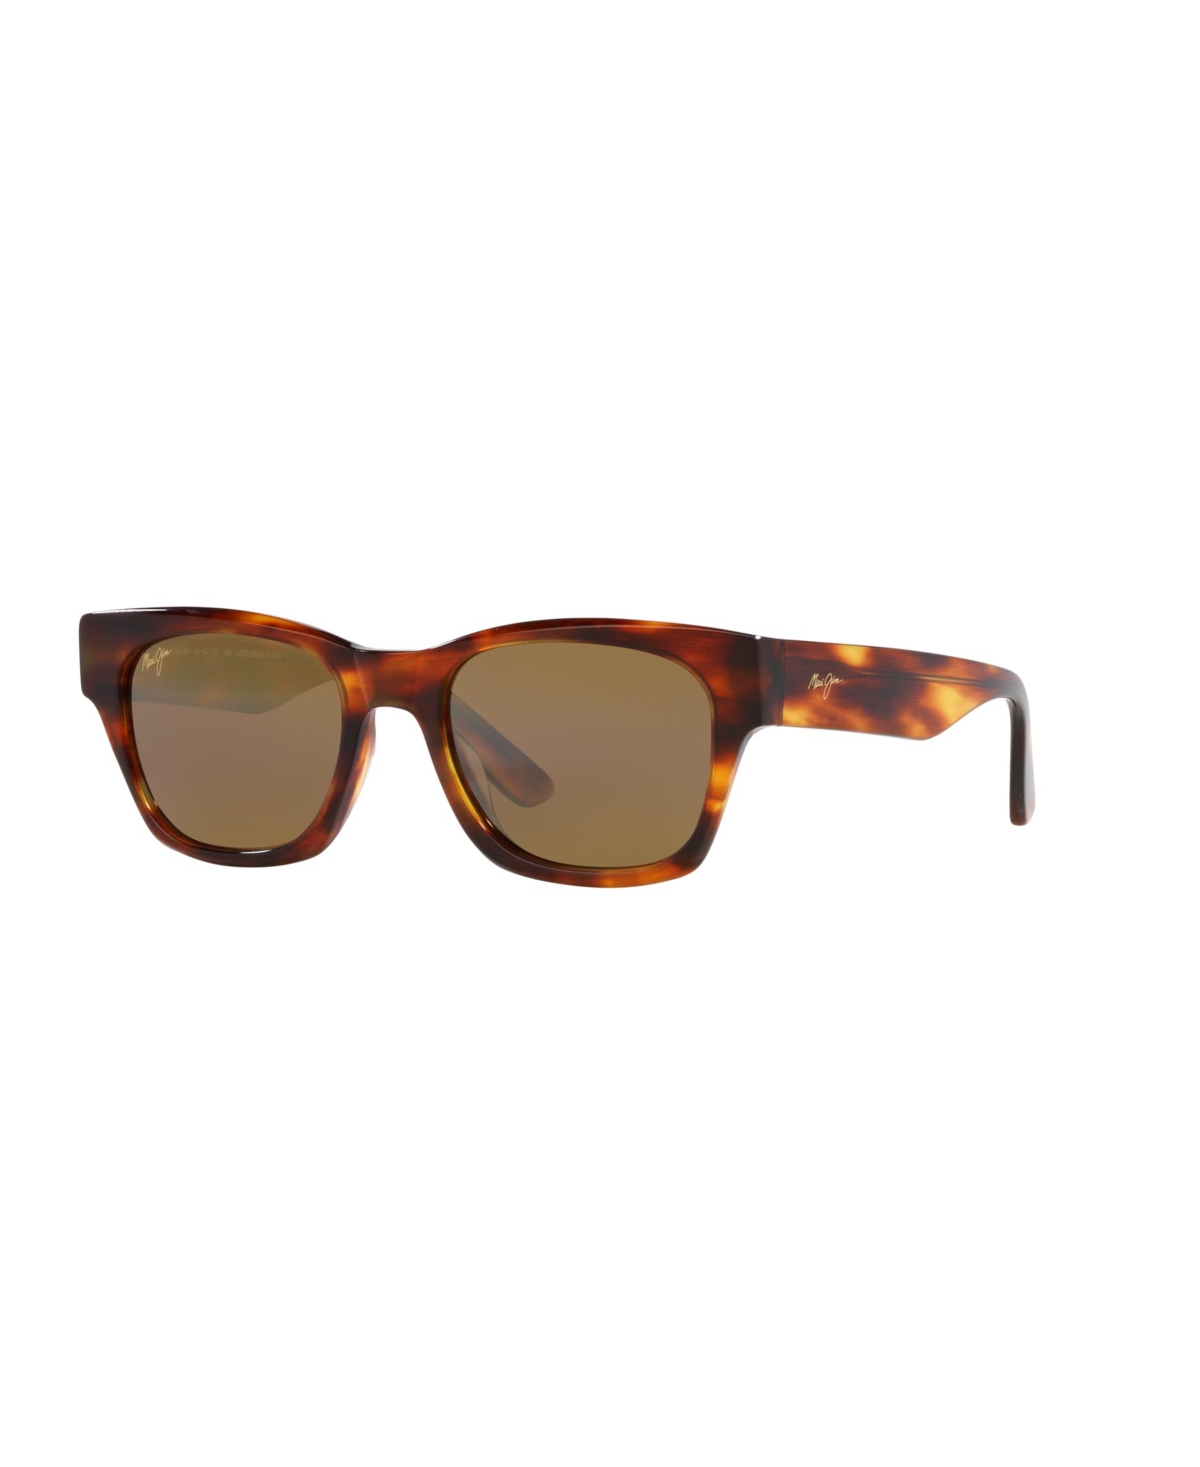 Maui Jim Unisex Polarized Sunglasses, Valley Isle Mj000734 In Tortoise